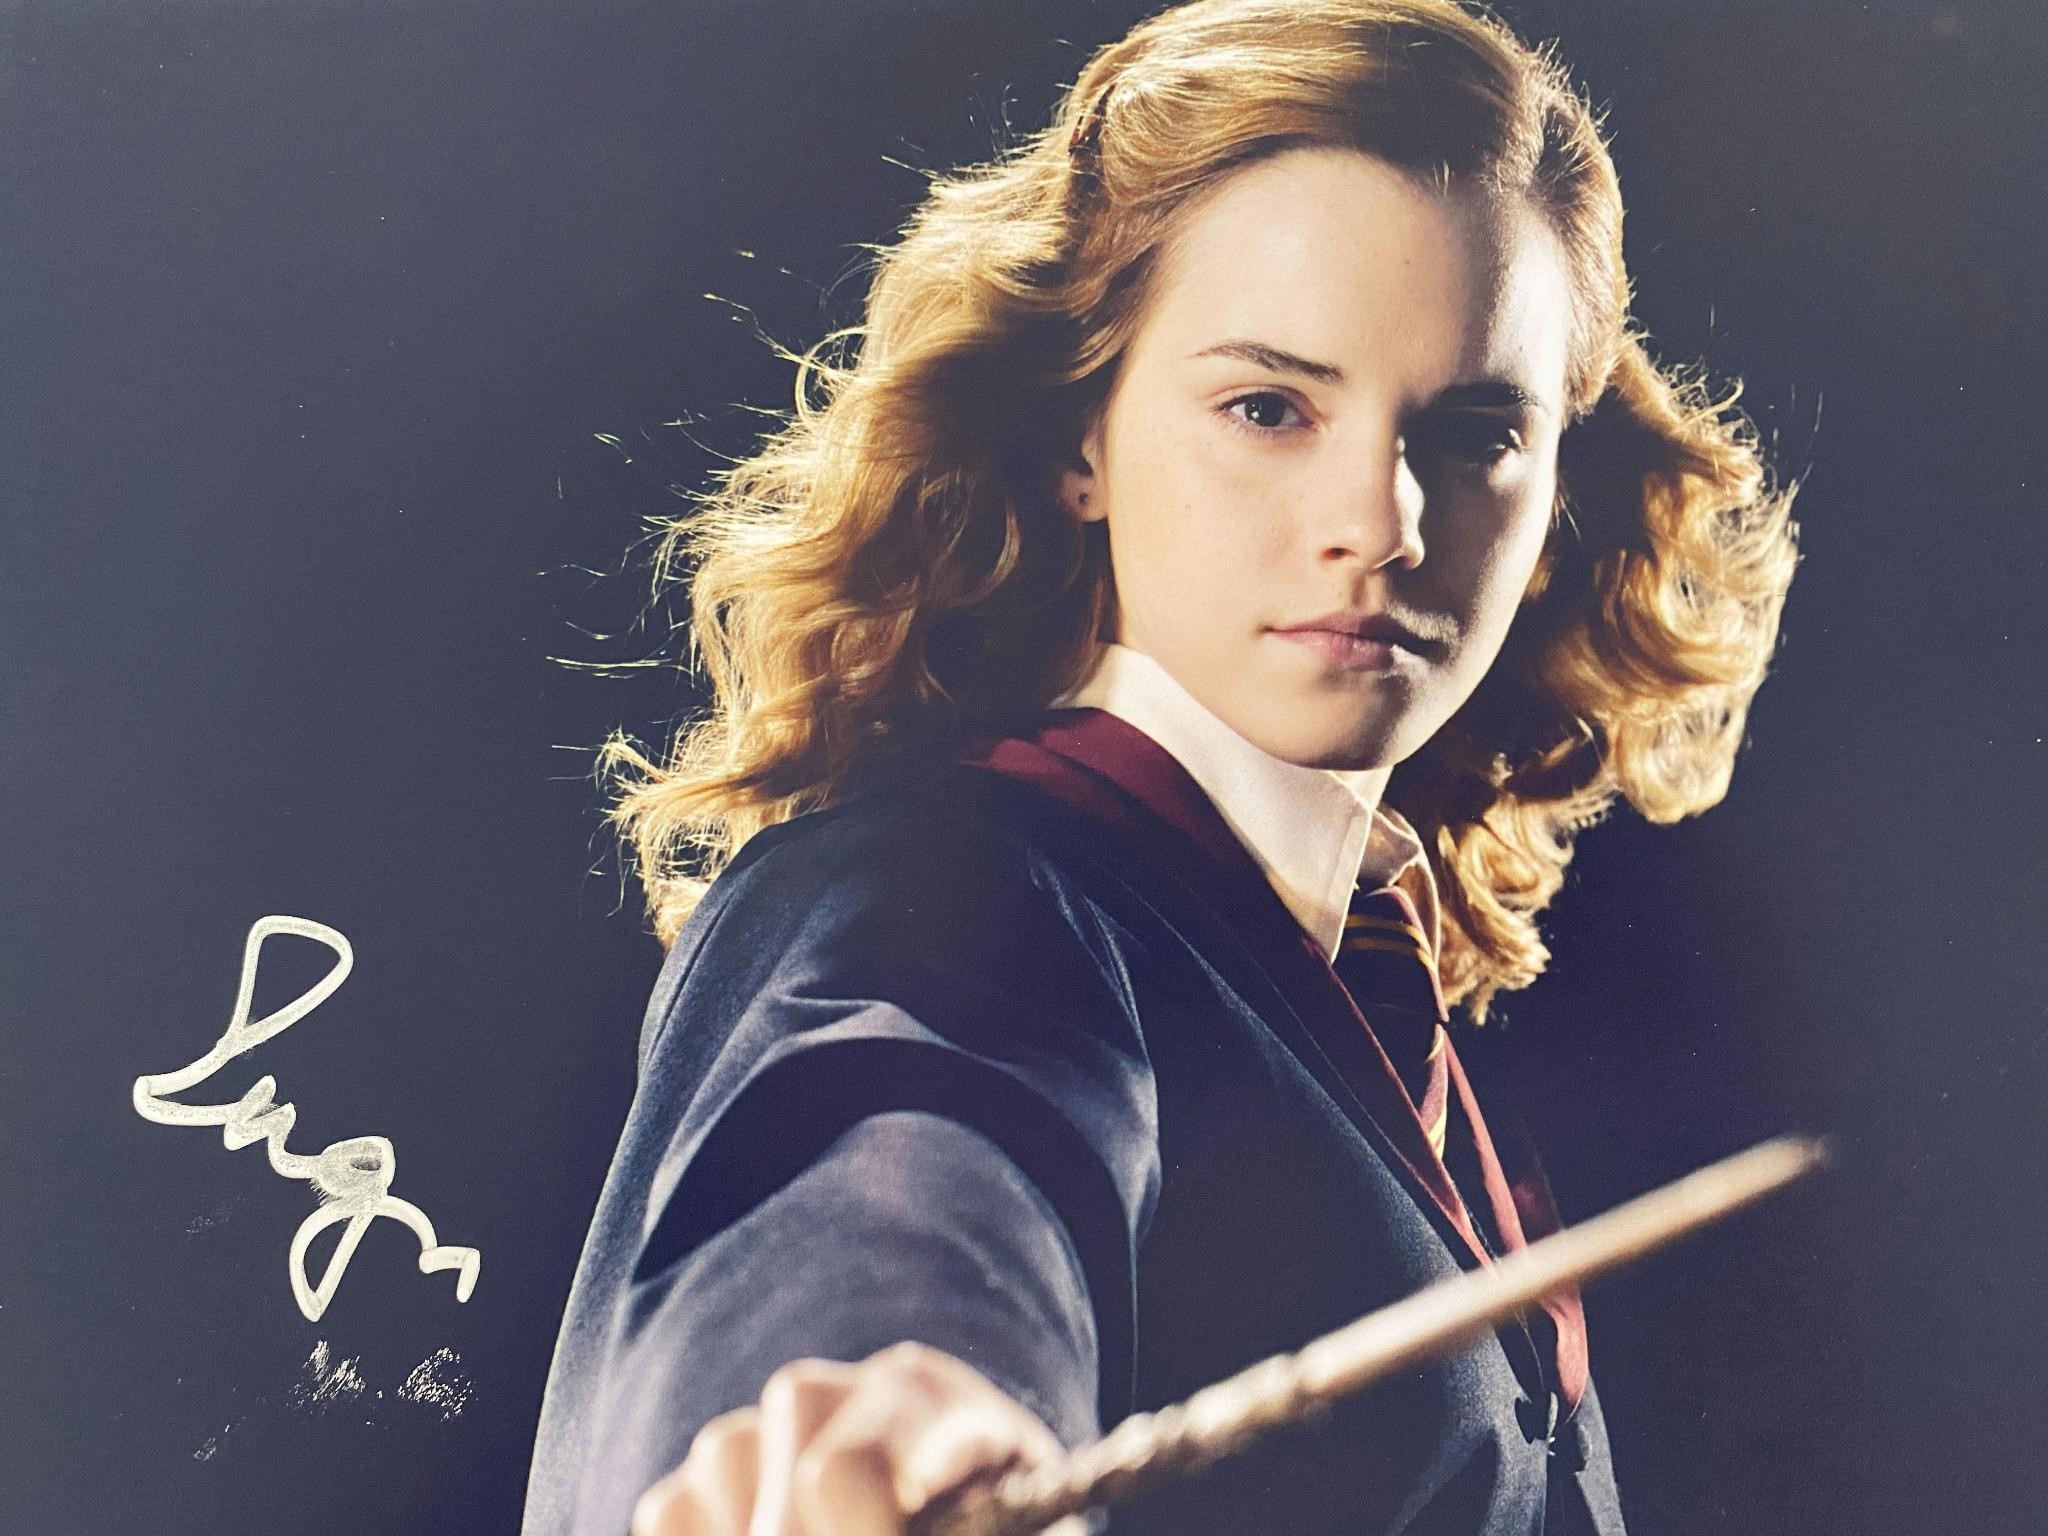 Harry Potter Emma Watson signed photo